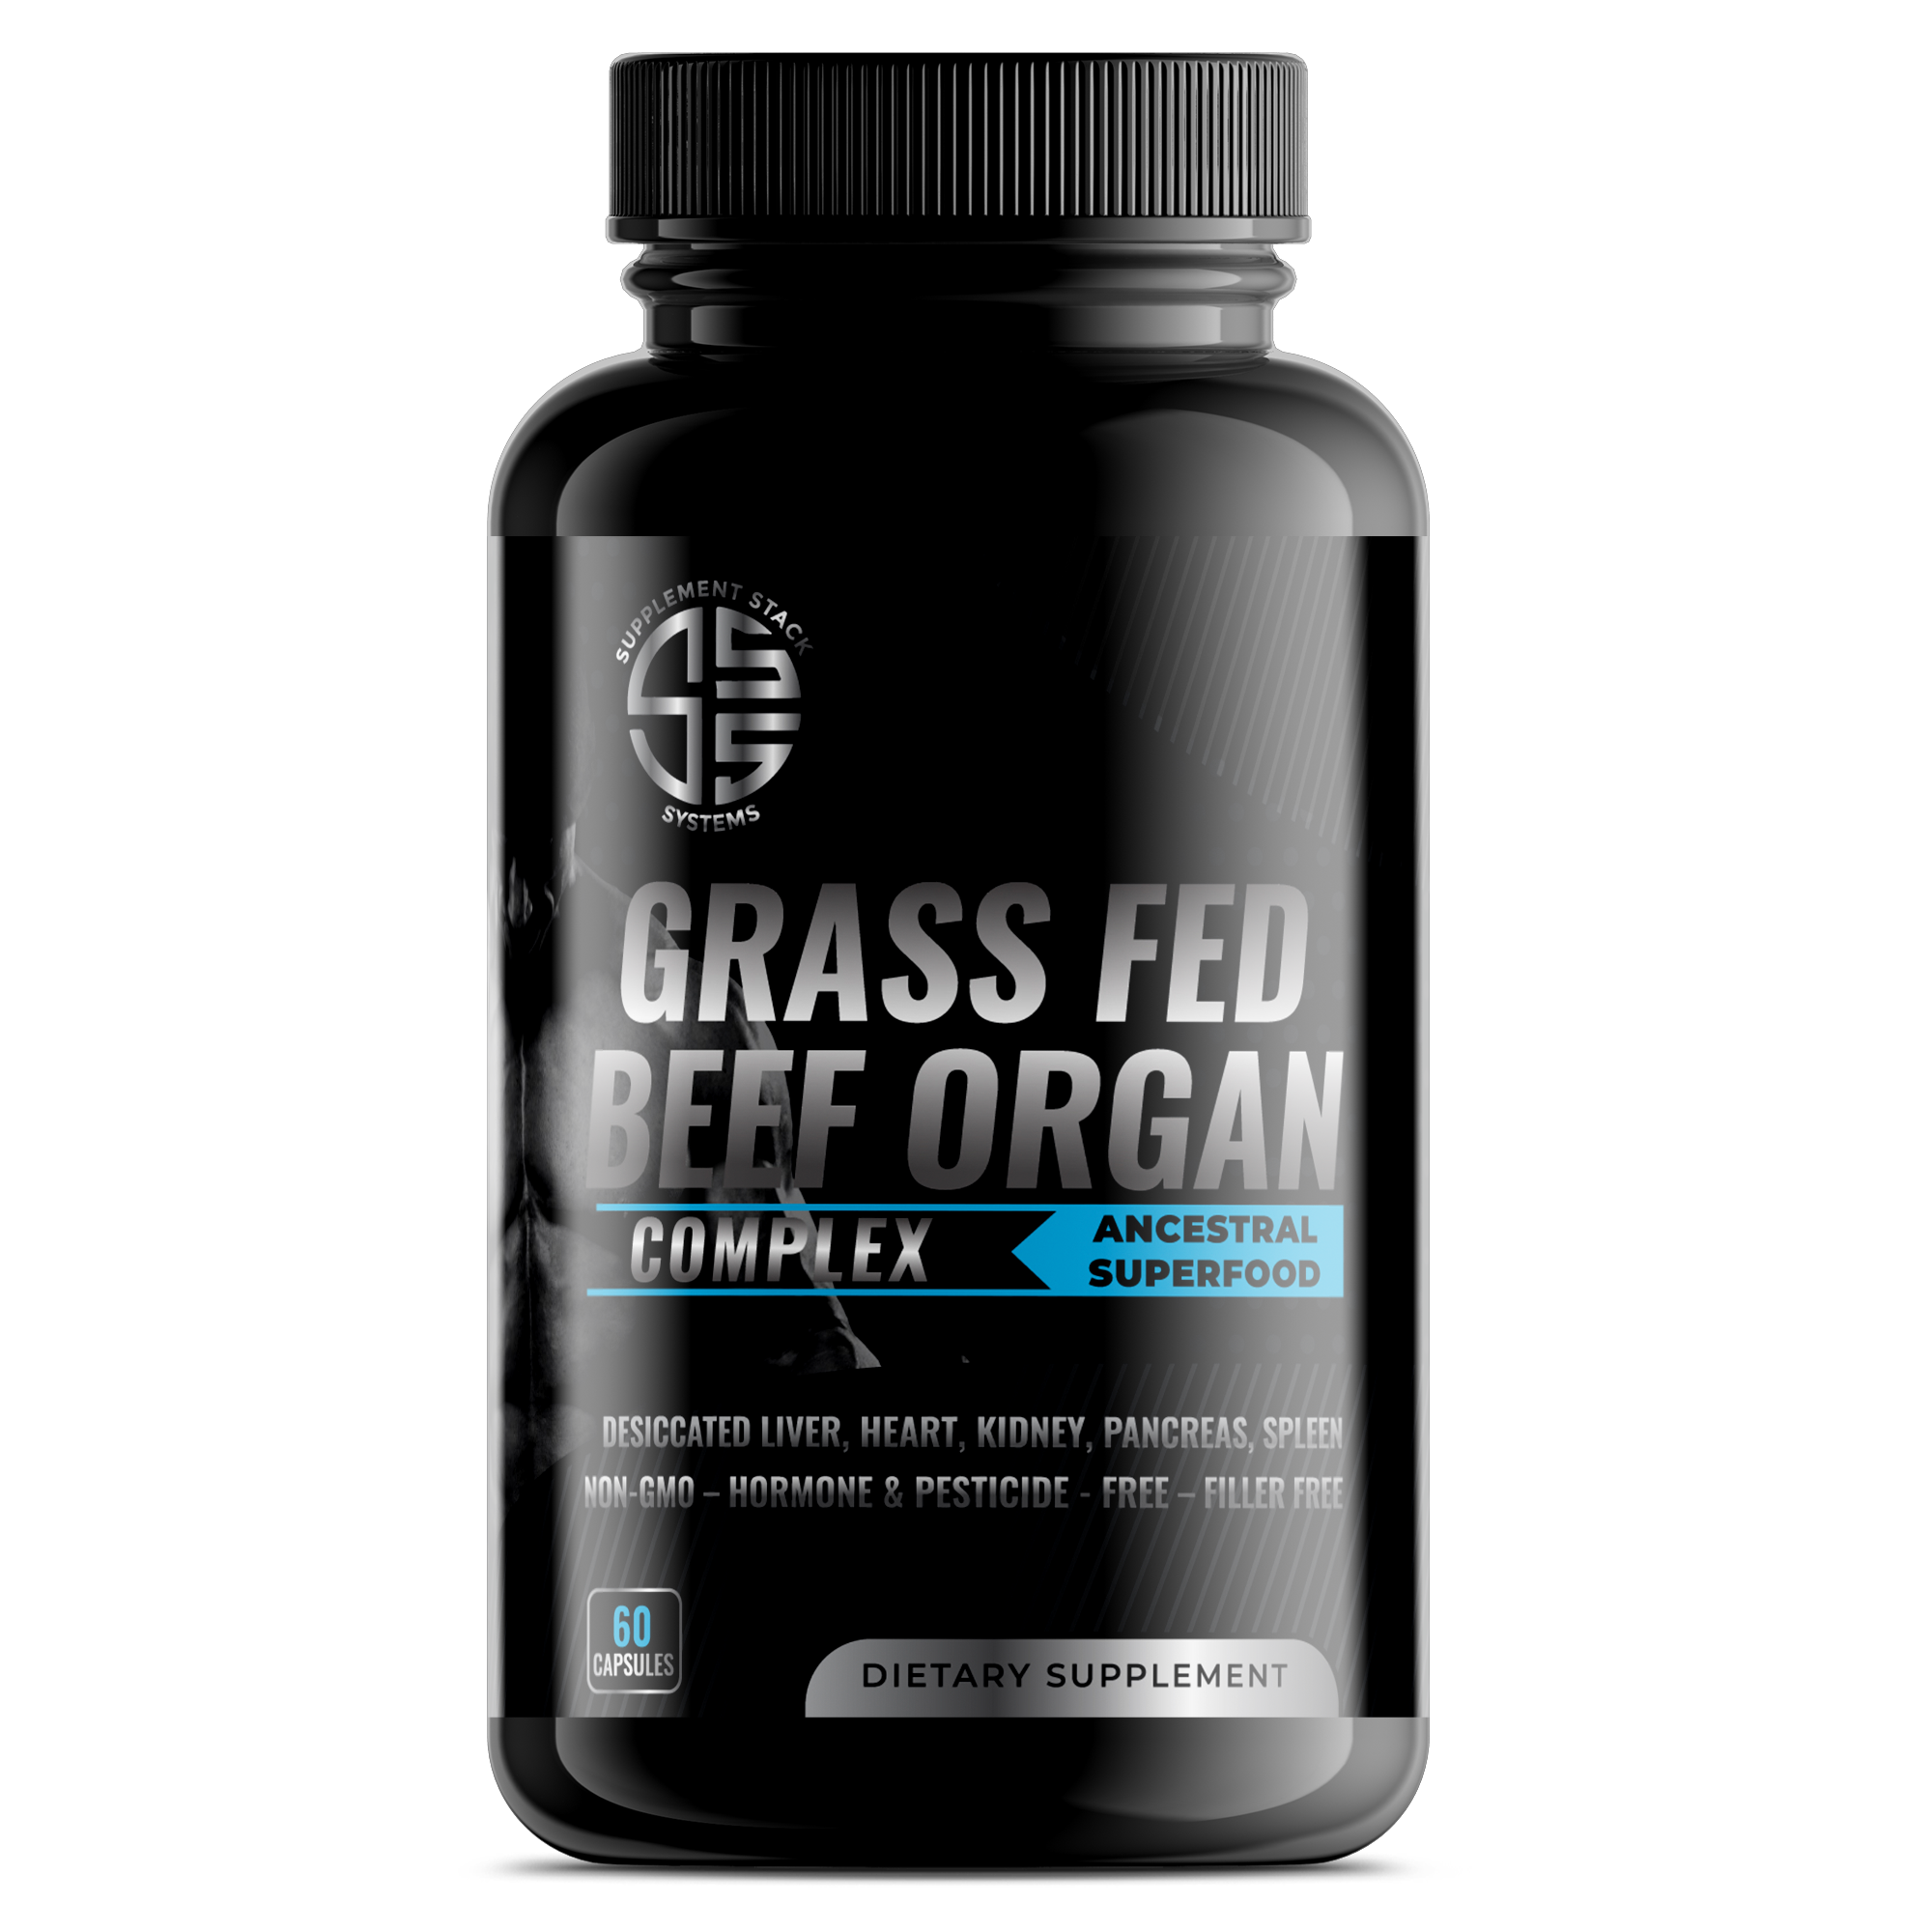 Grass Fed Beef Organ Complex–Ancestral Superfood